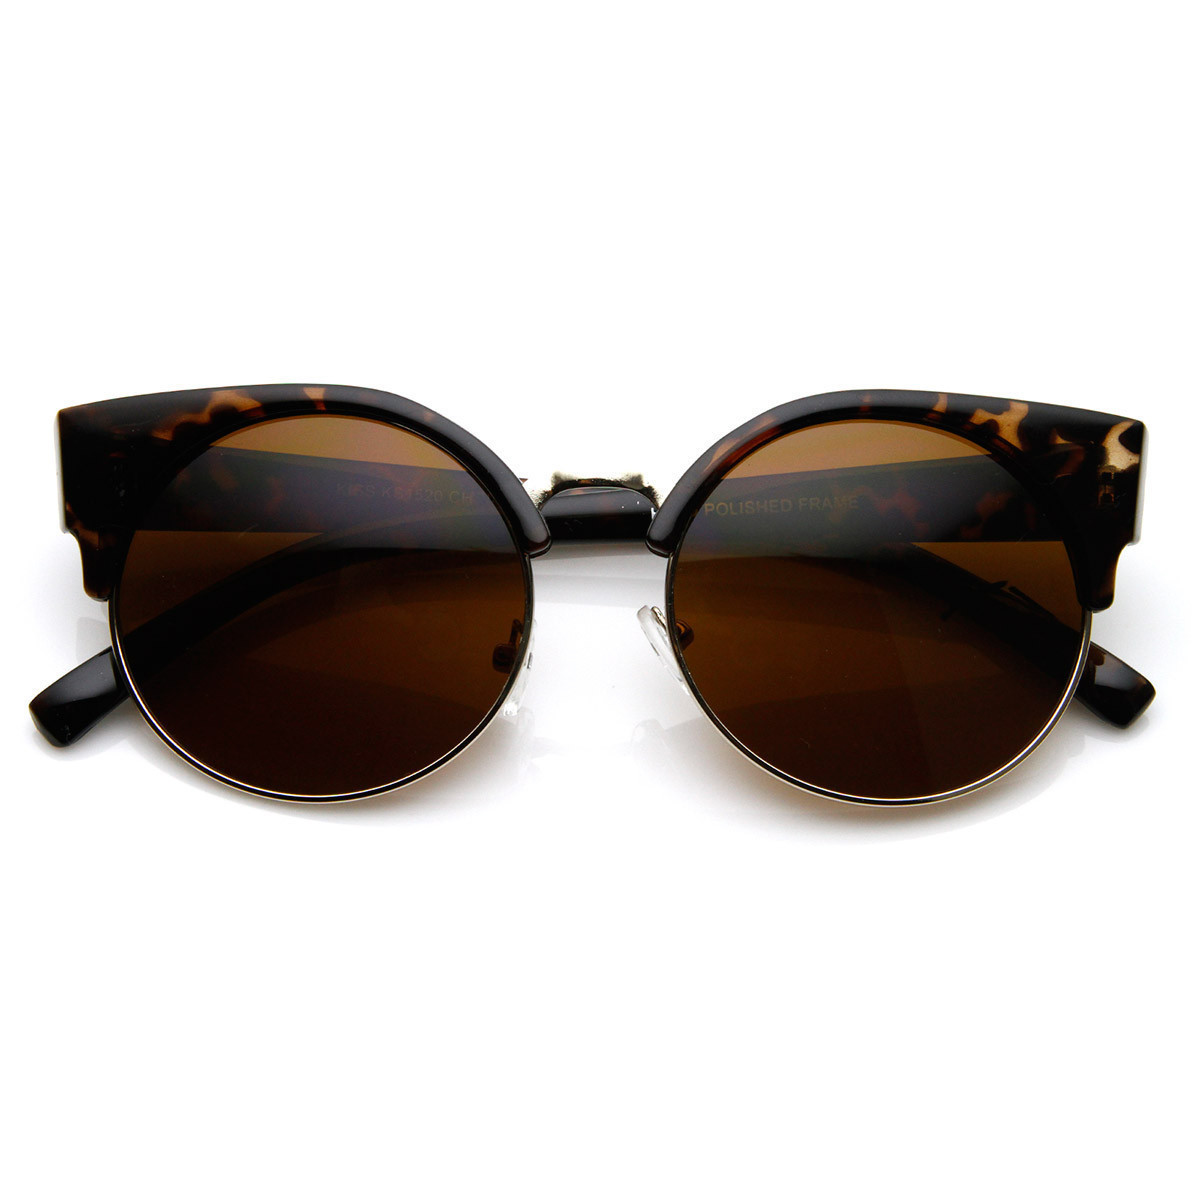 Round Circle Half Frame Semi-Rimless Cateye Sunglasses - 8785 - Tortoise